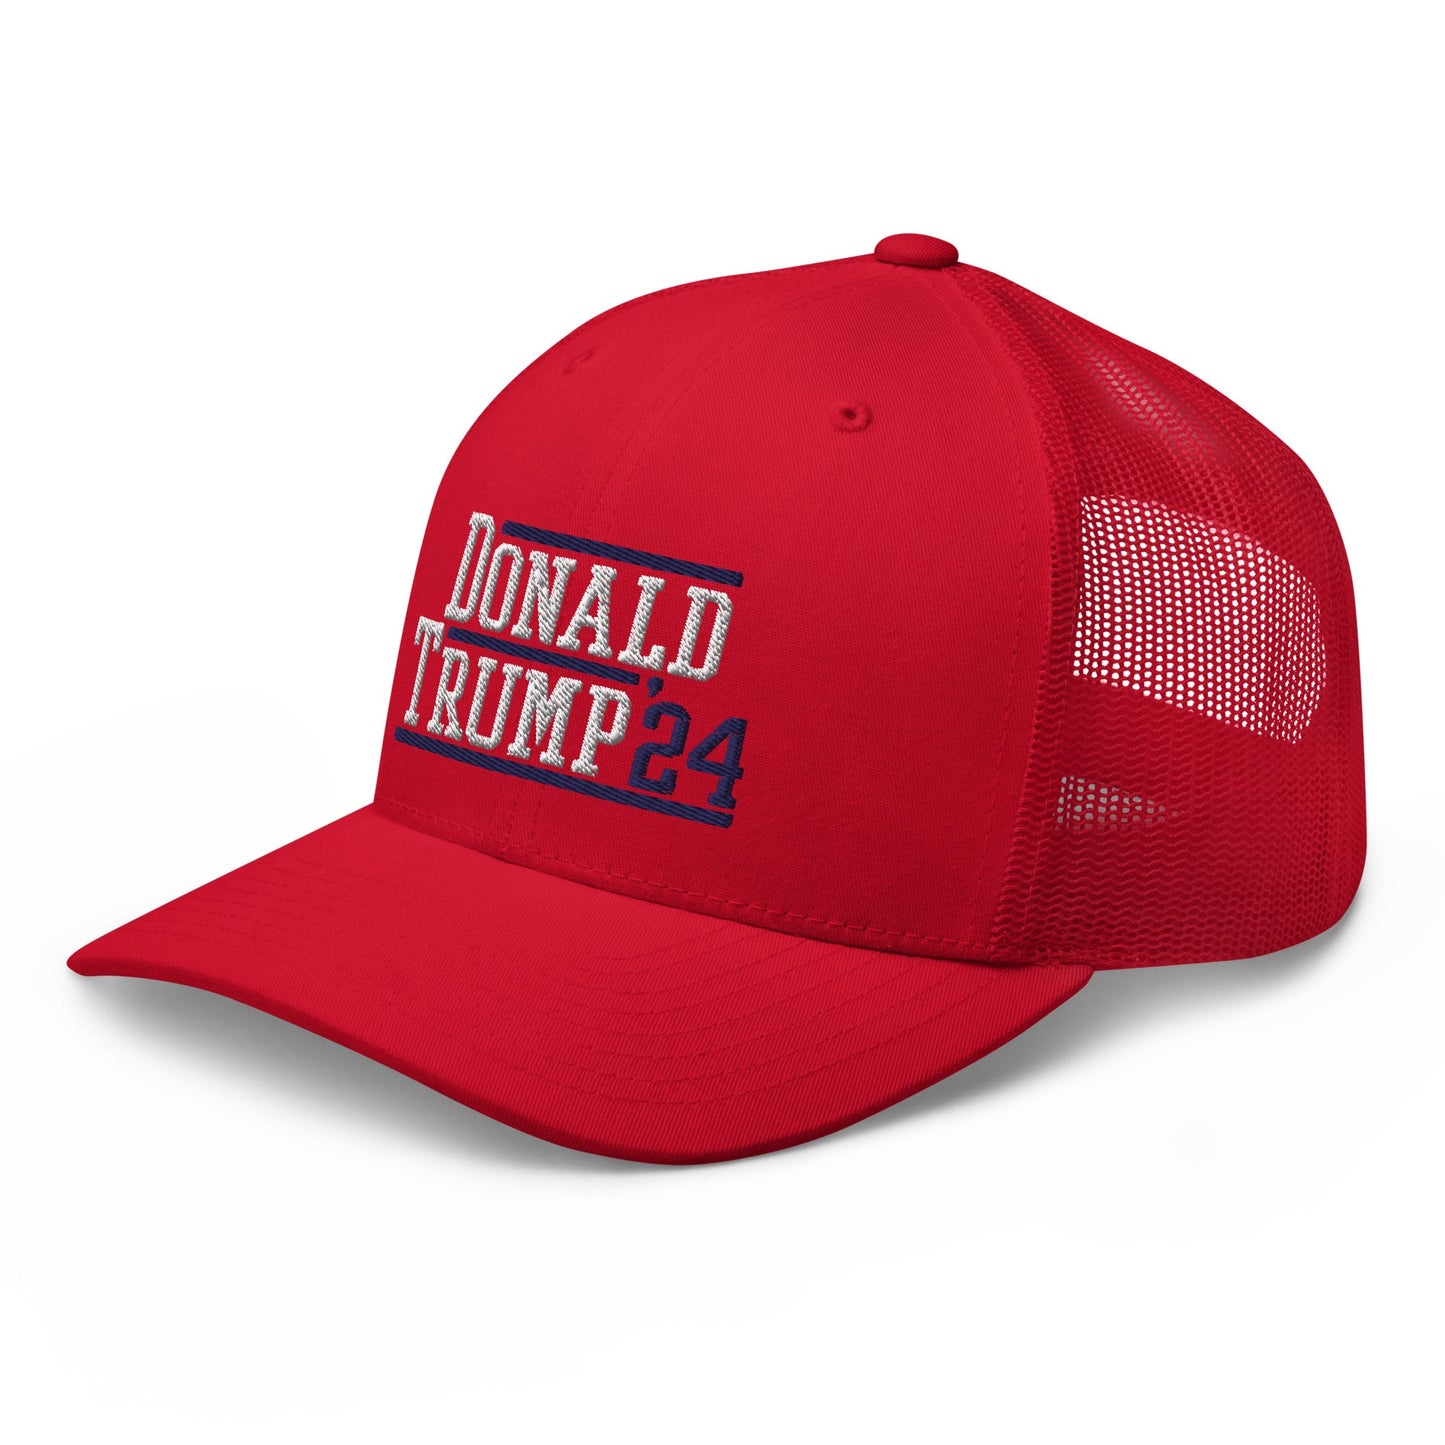 Donald Trump 2024 Snapback Trucker Hat Red